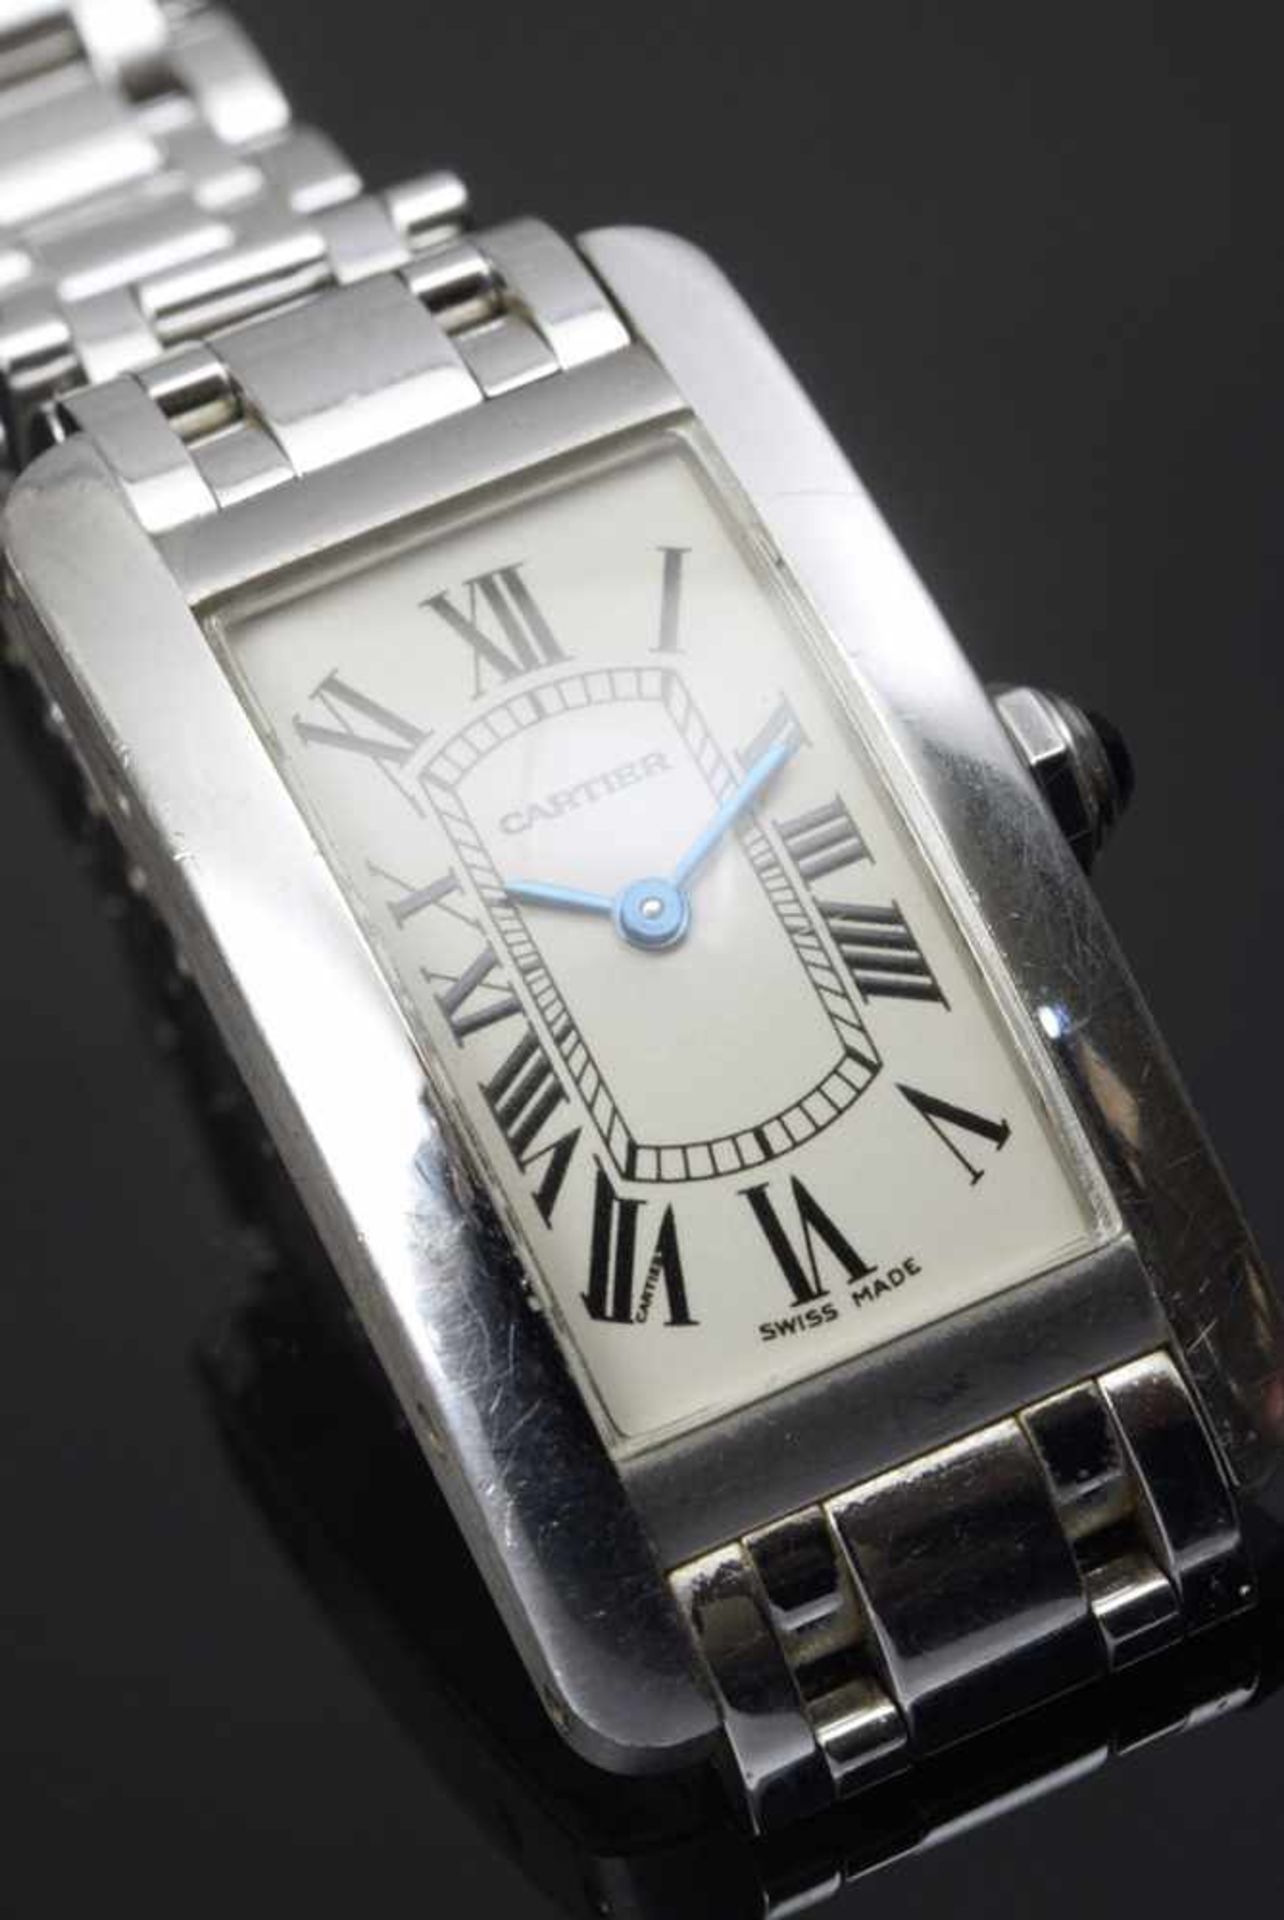 WG 750 Cartier "Tank Américaine Lady" watch, quartz movement, white dial with roman numerals, - Image 4 of 7